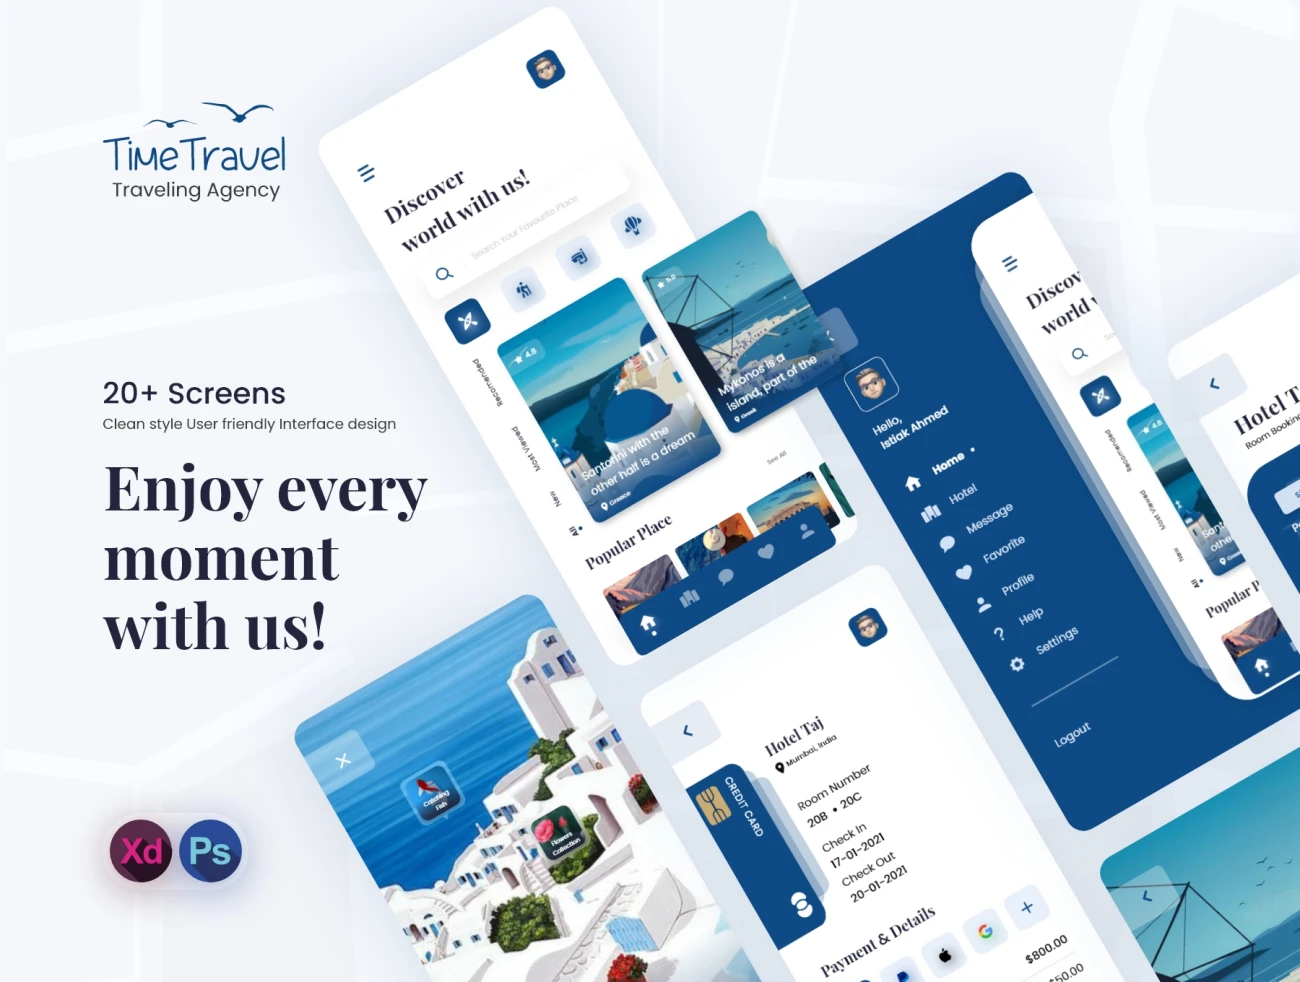 Travel and Hotel service - Mobile App 20屏旅行解决方案和酒店预订服务应用设计套件-UI/UX-到位啦UI